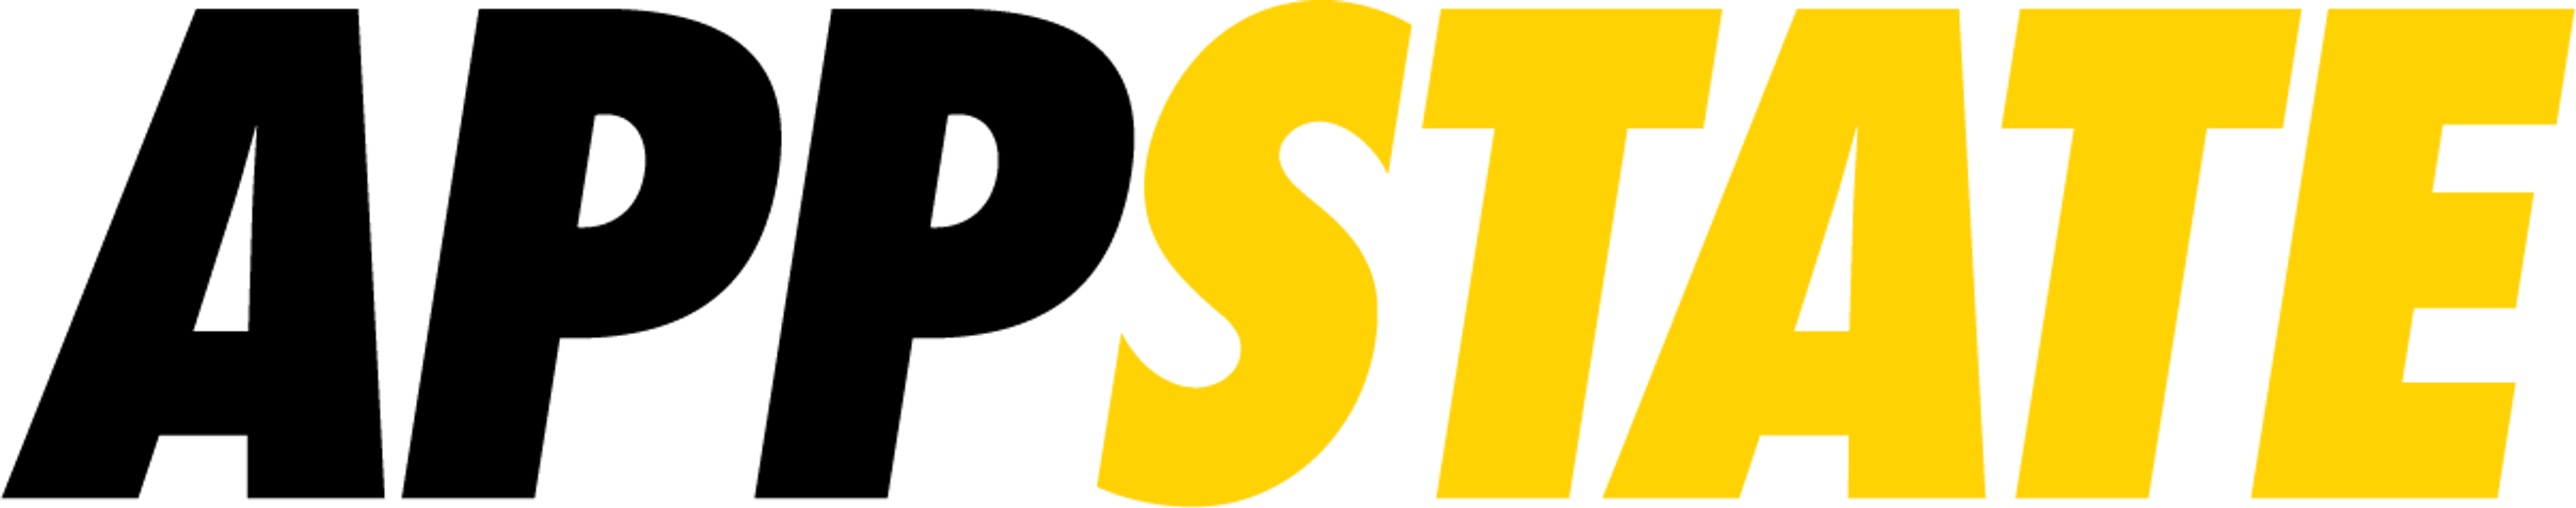 Secondary App State logo